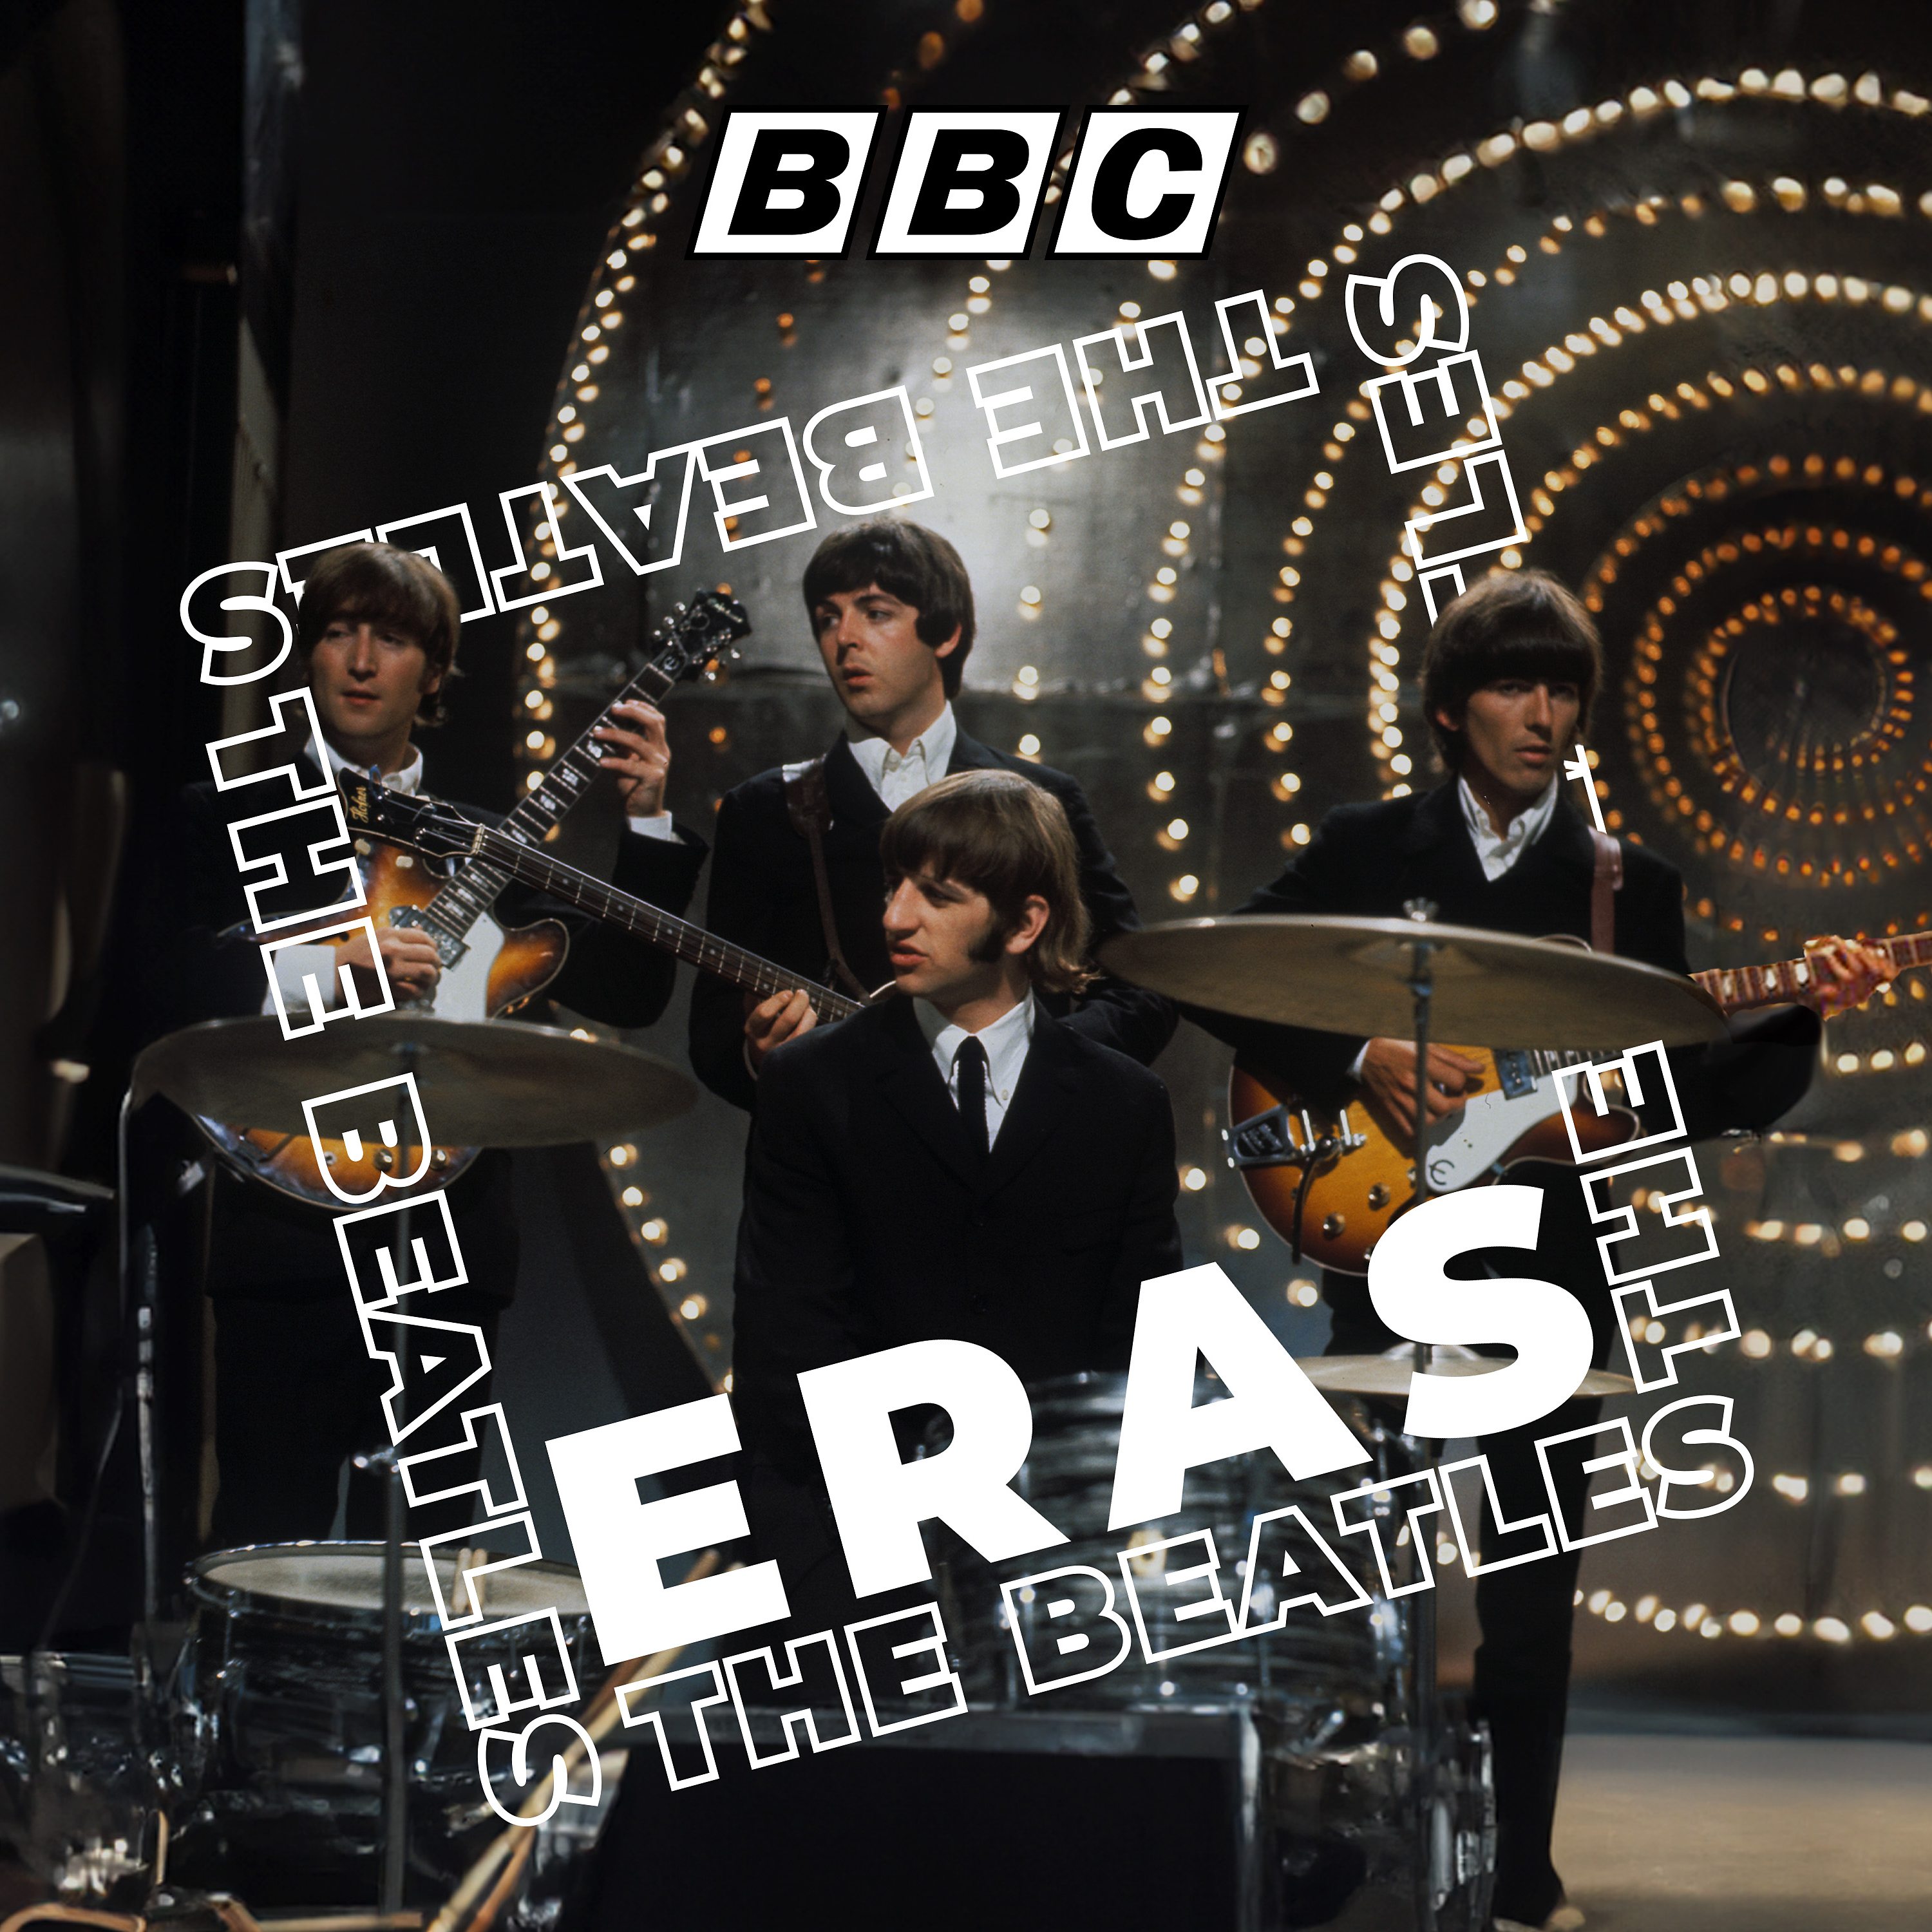 The Beatles: 3. Rebellion